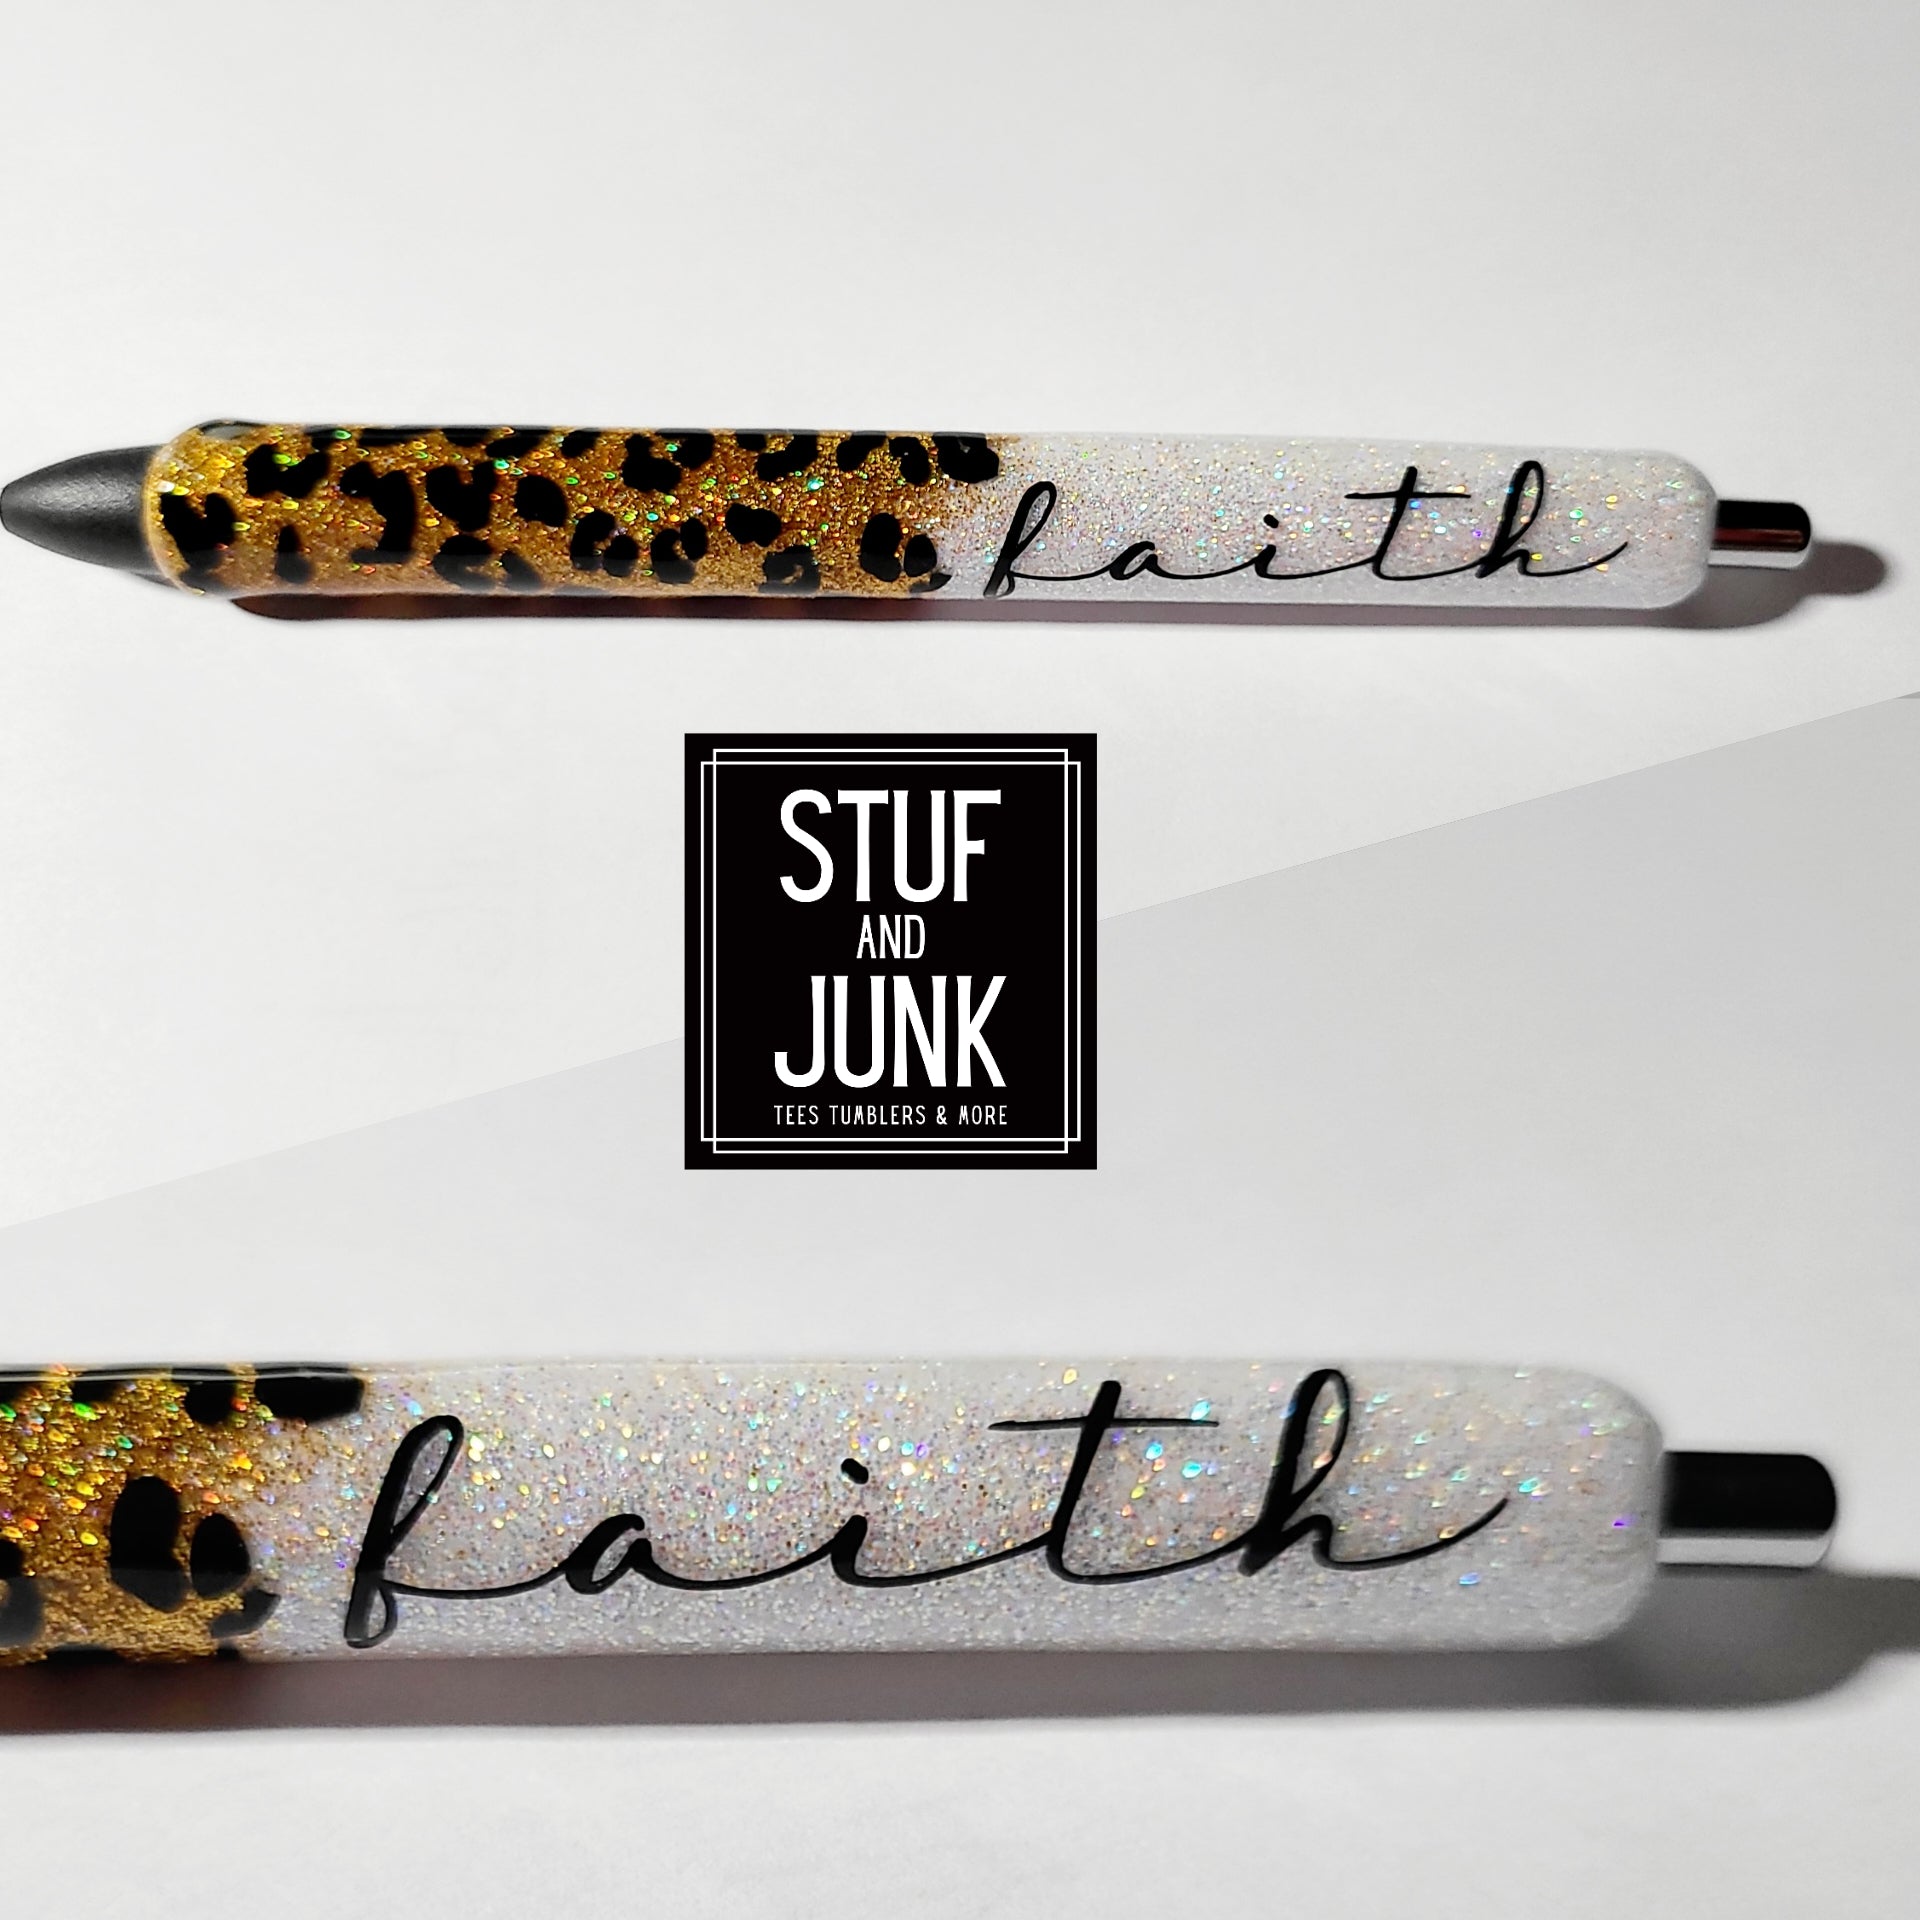 Glitter pens, beach theme glitter glitter pens, leopard glitter pens, –  K.C.'s Creations Station